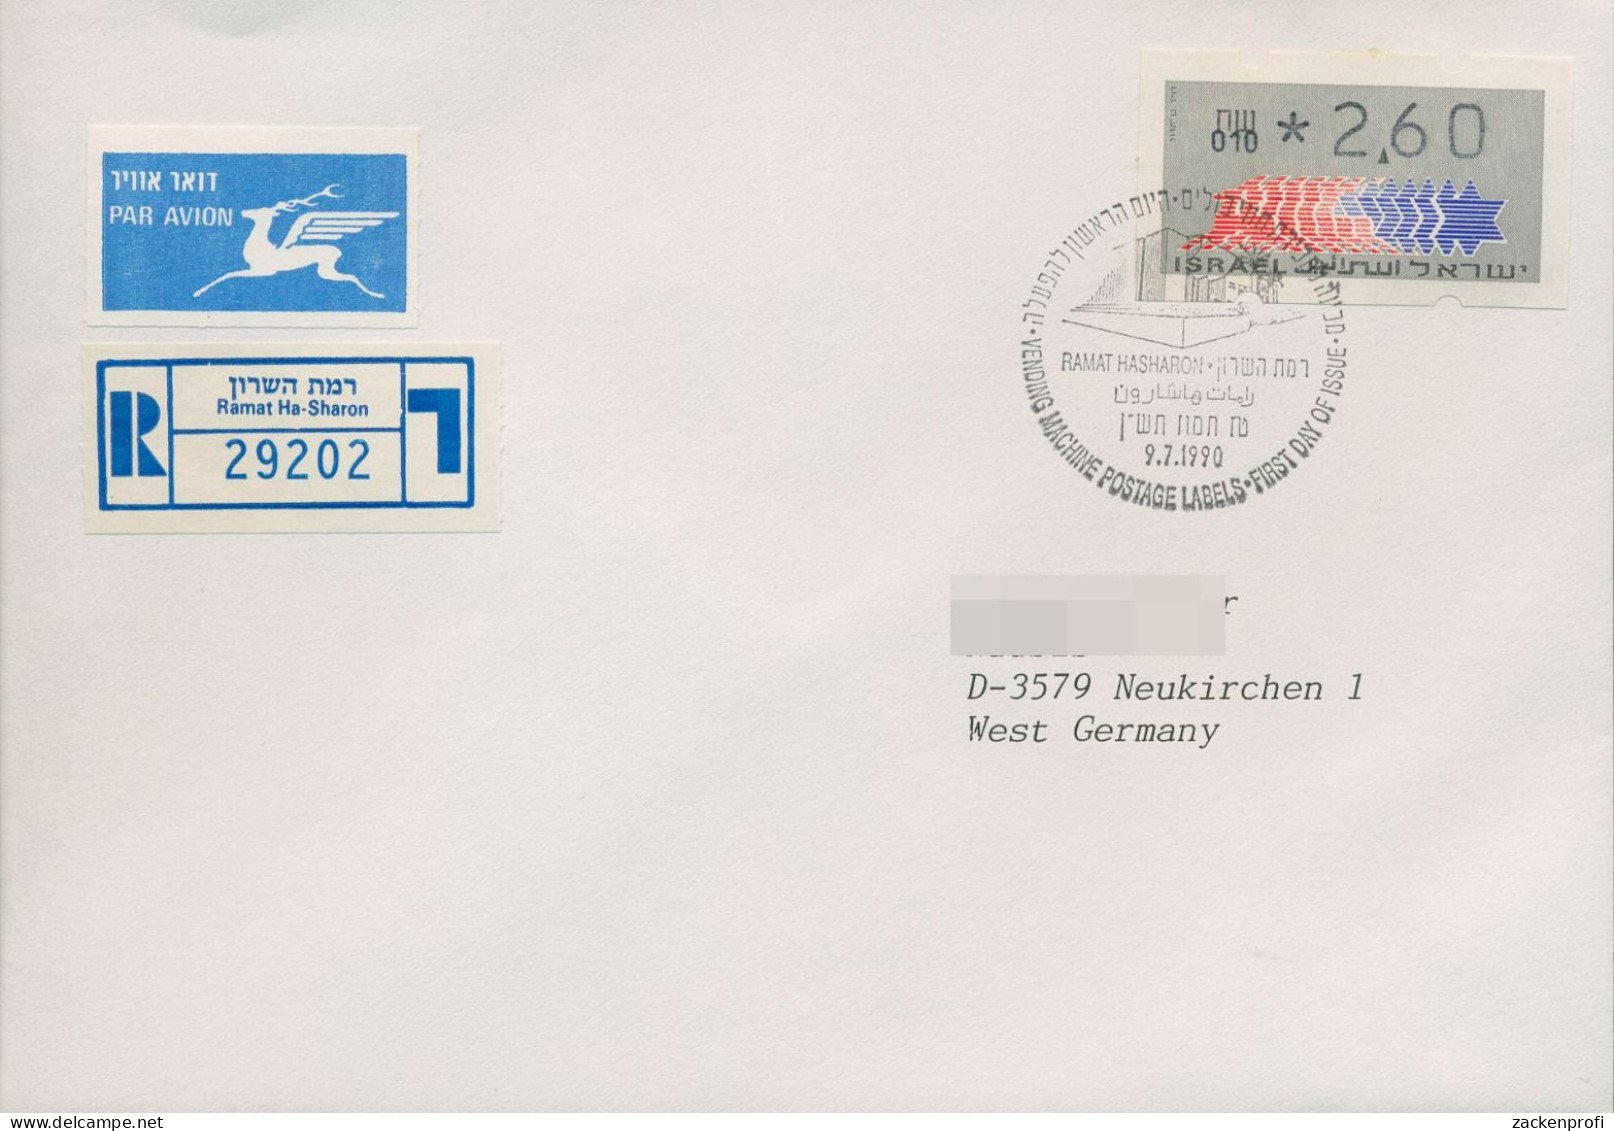 Israel ATM 1990 Hirsch 010 Luftpost R-Ersttagsbrief, ATM 3.1.10 FDC (X80405) - Franking Labels